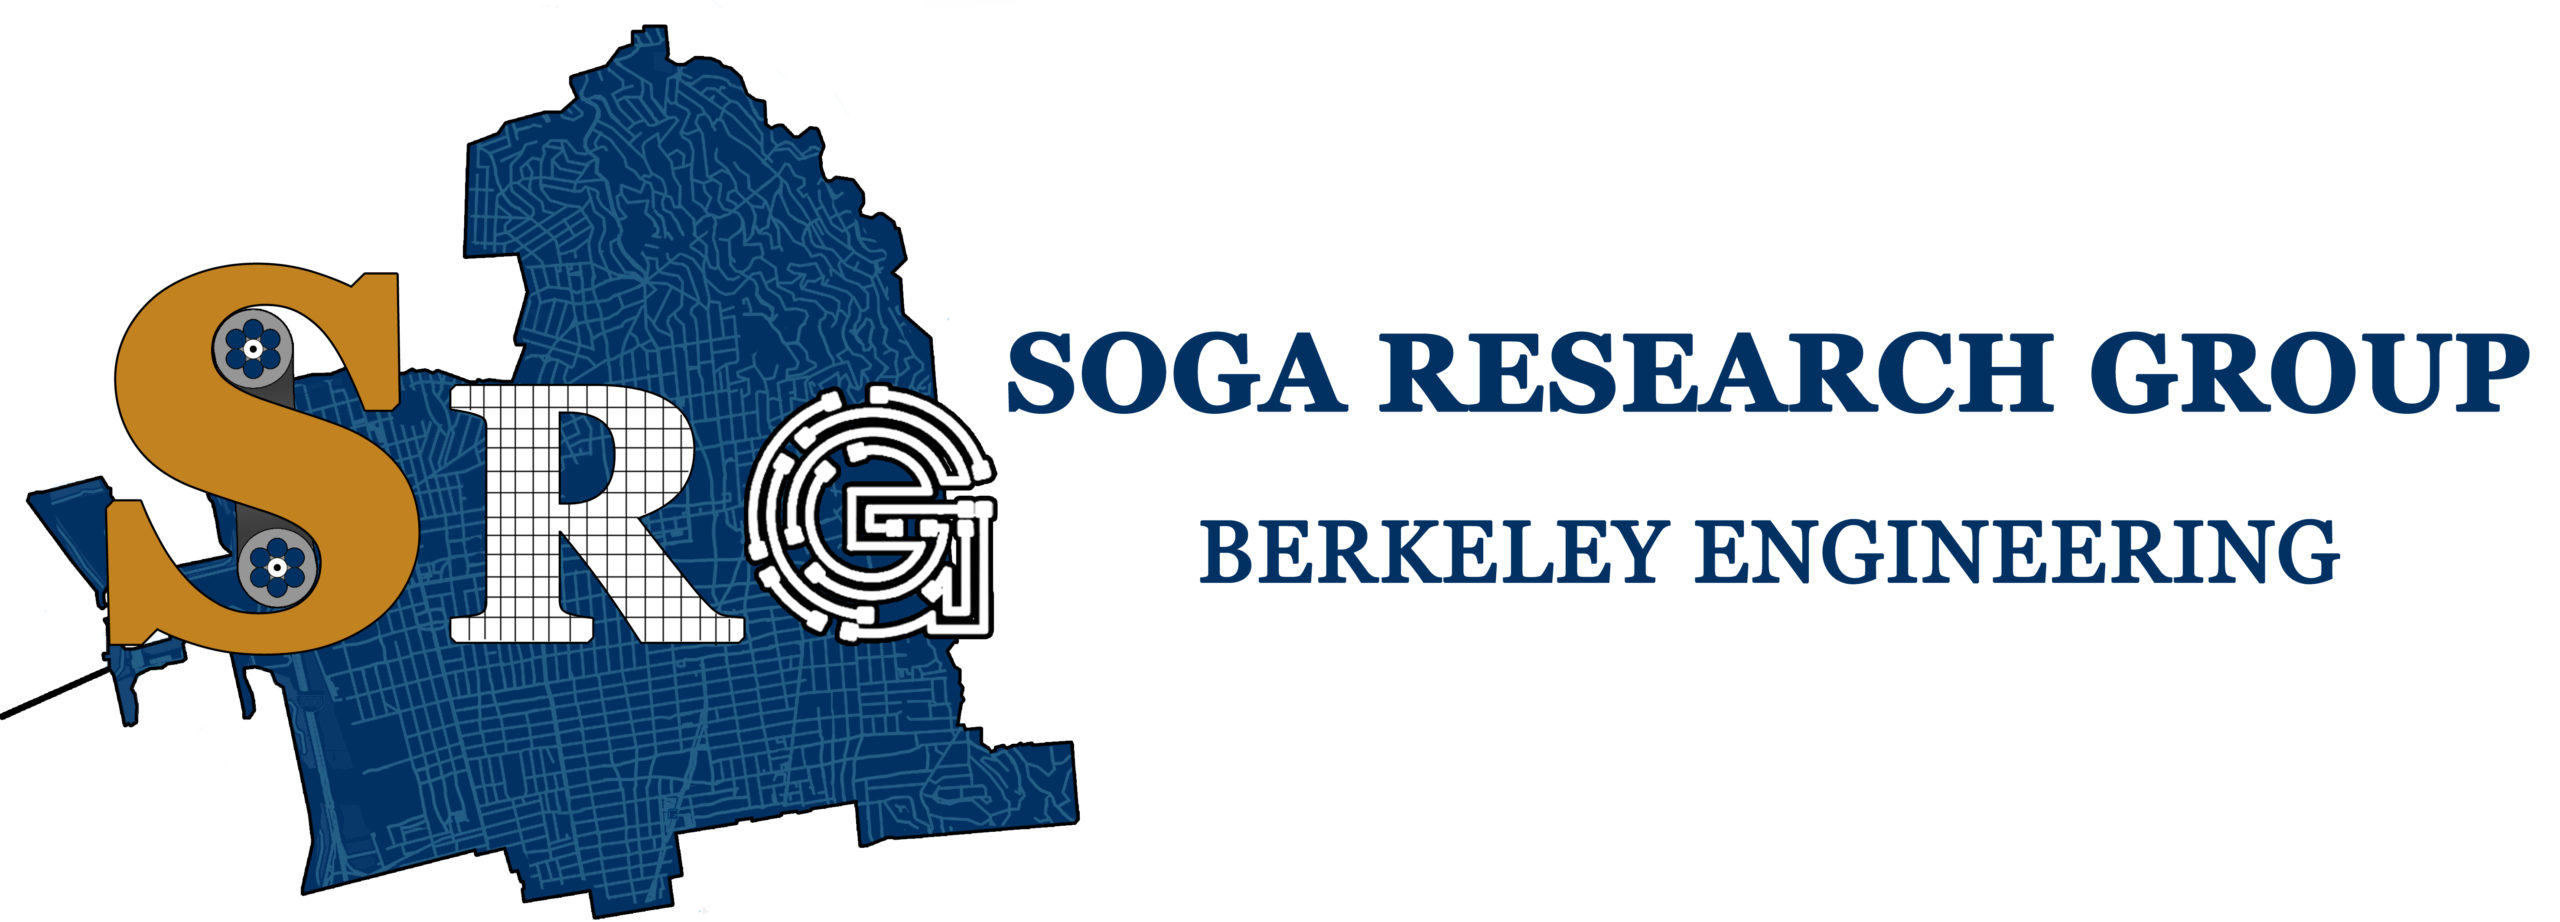 Soga Research Group – Berkeley Engineering